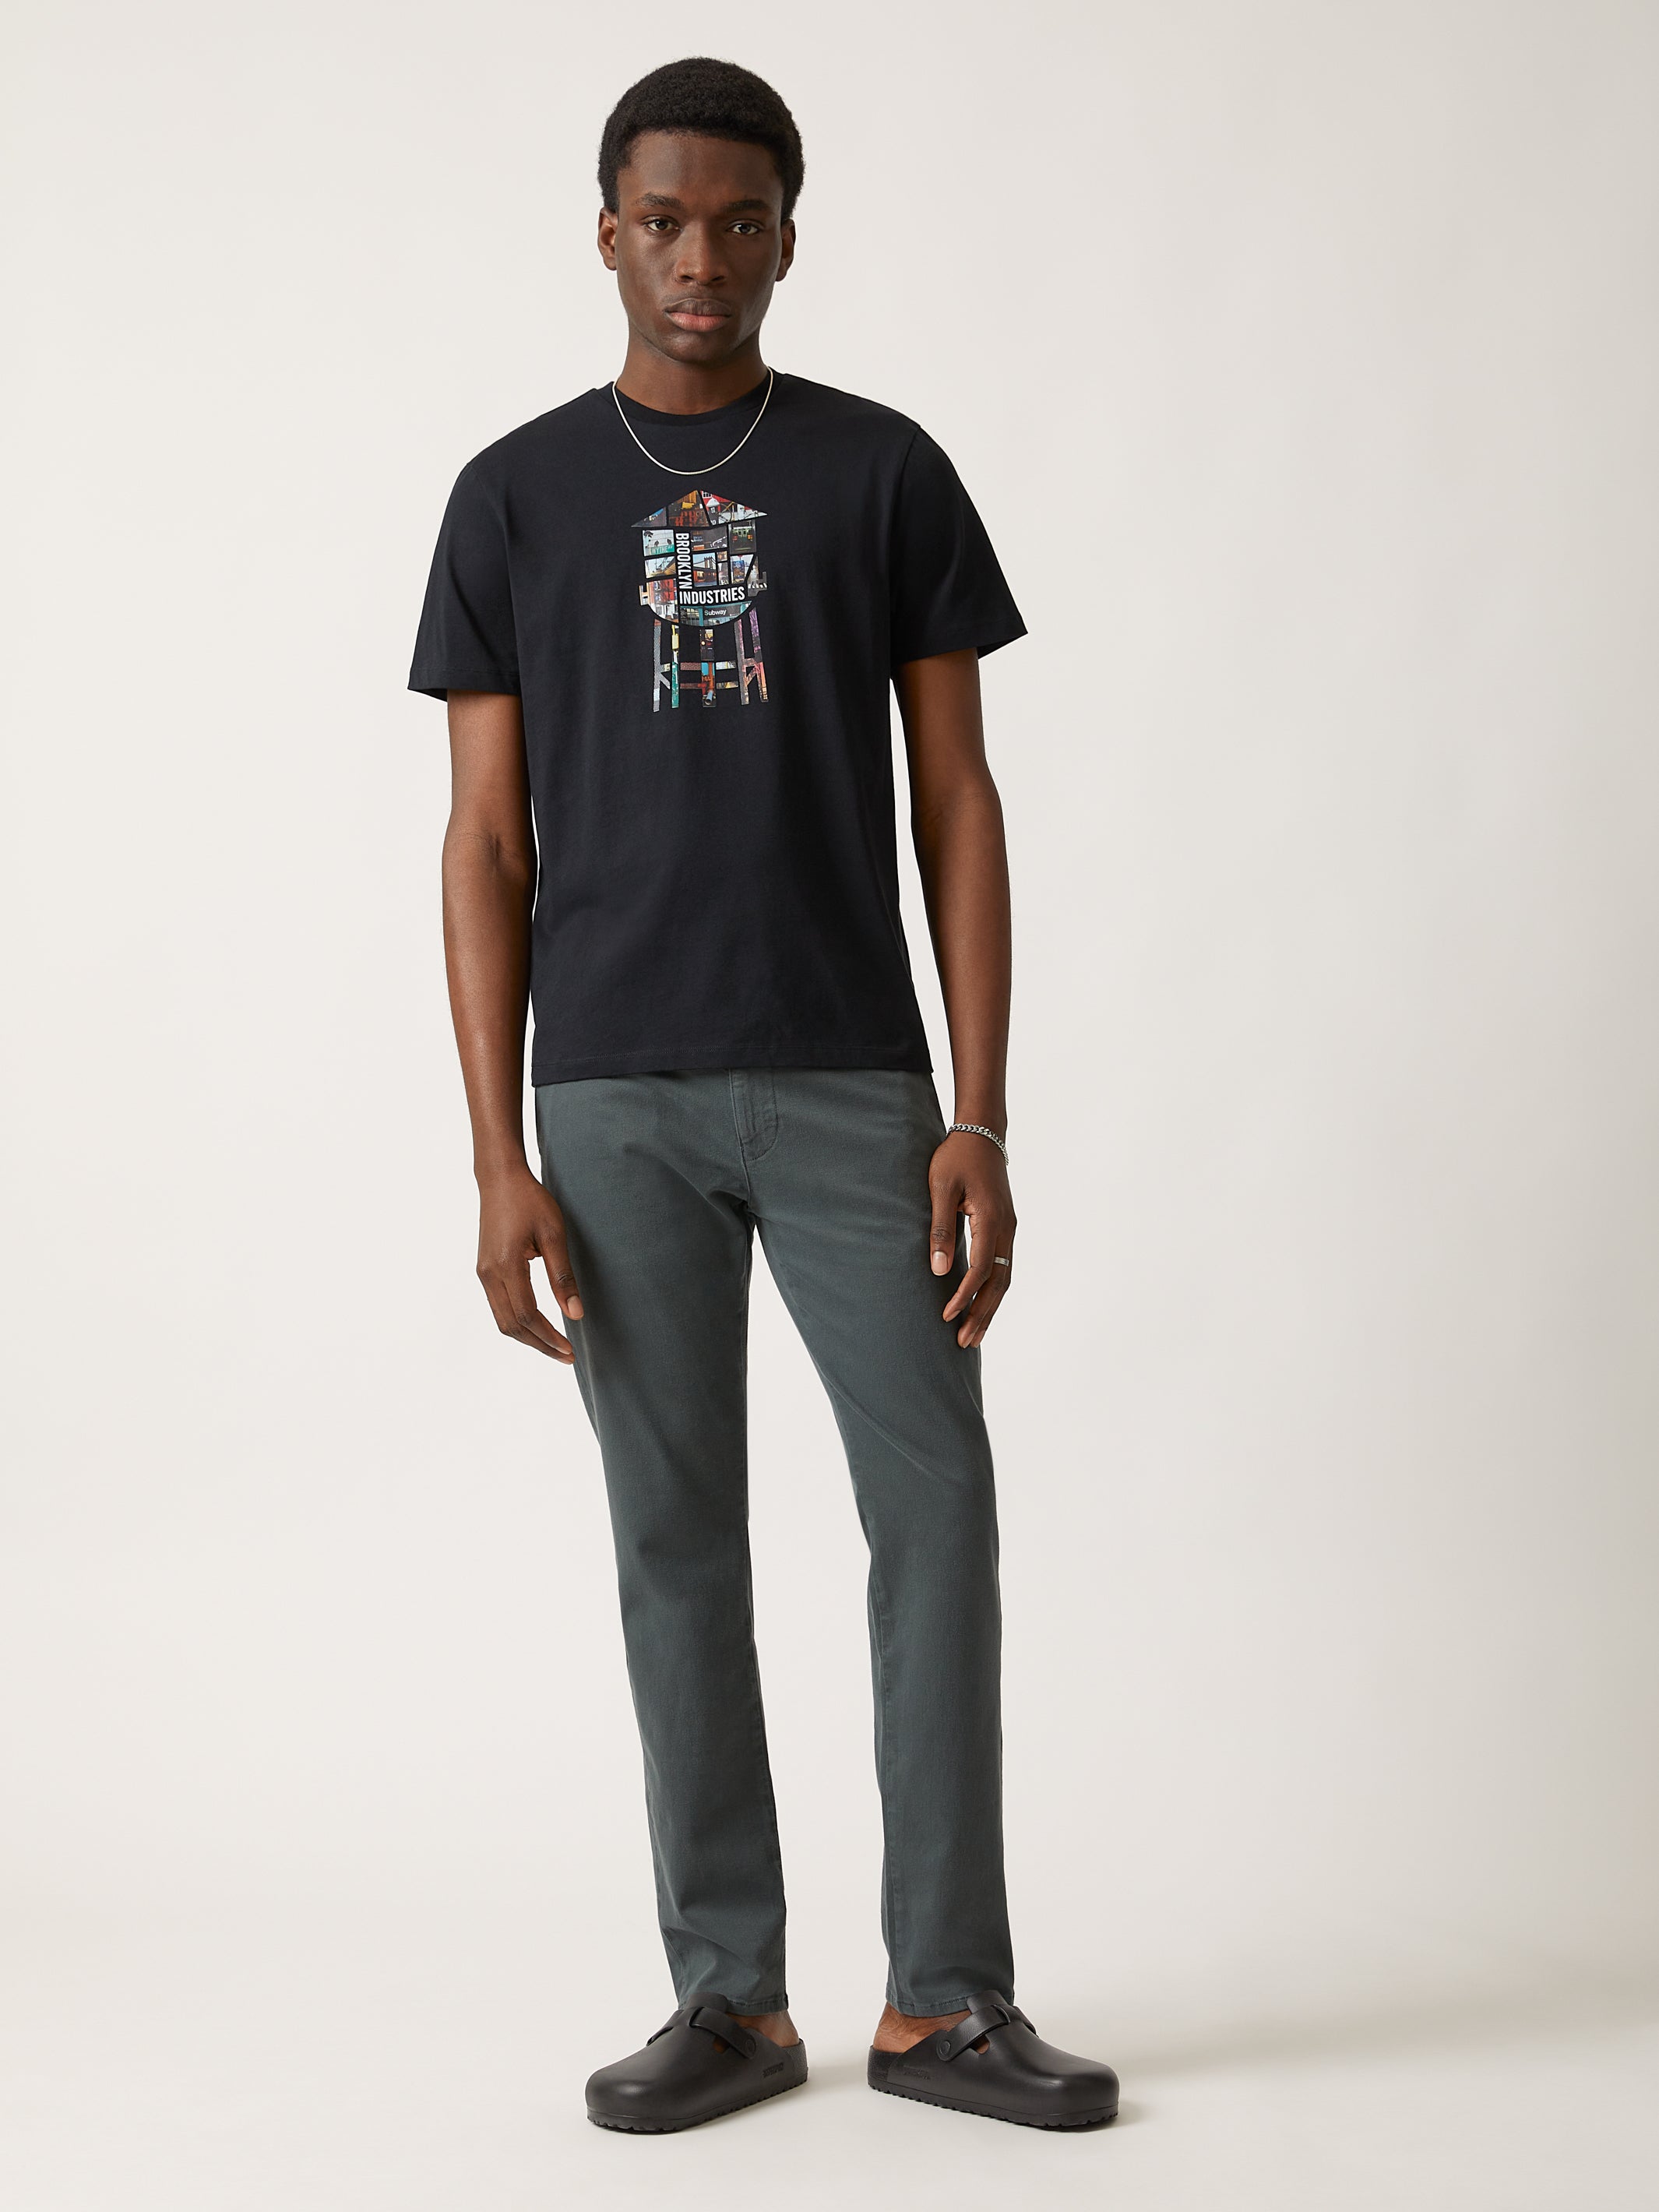 Men's Brooklyn Water Tower Photo T-shirt in Black - BROOKLYN INDUSTRIES